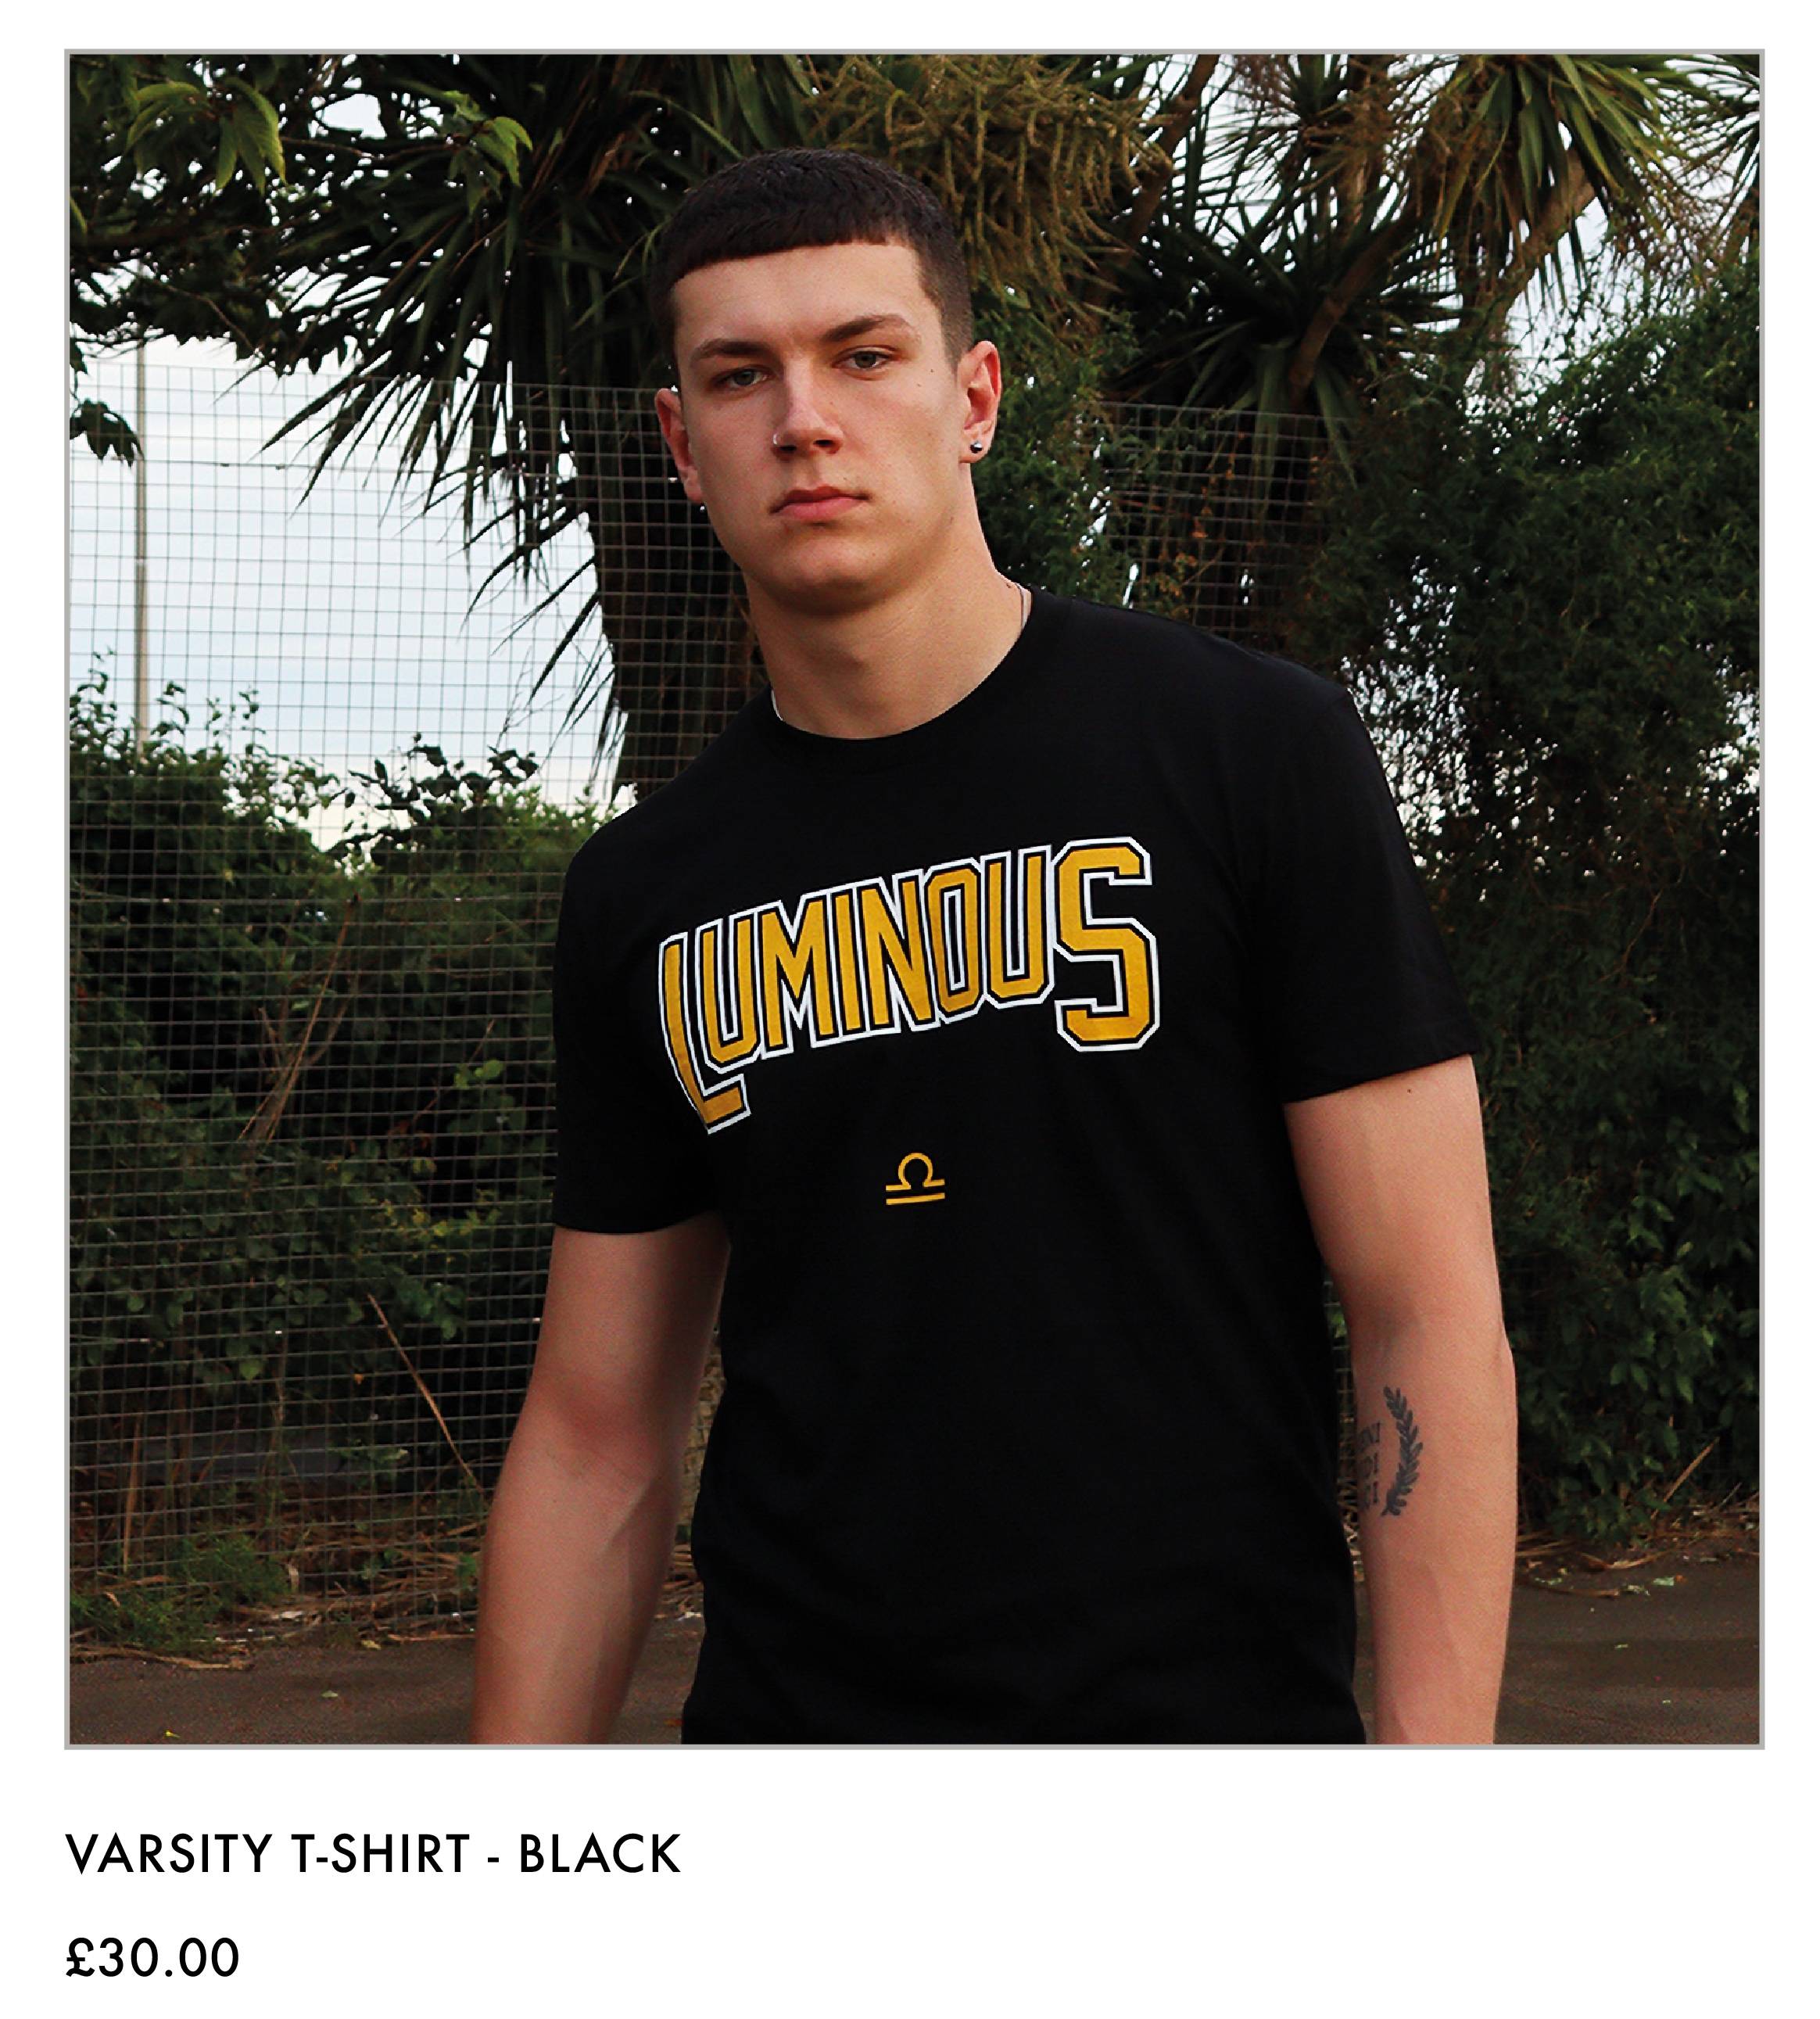 Varsity T-sshirt - Black